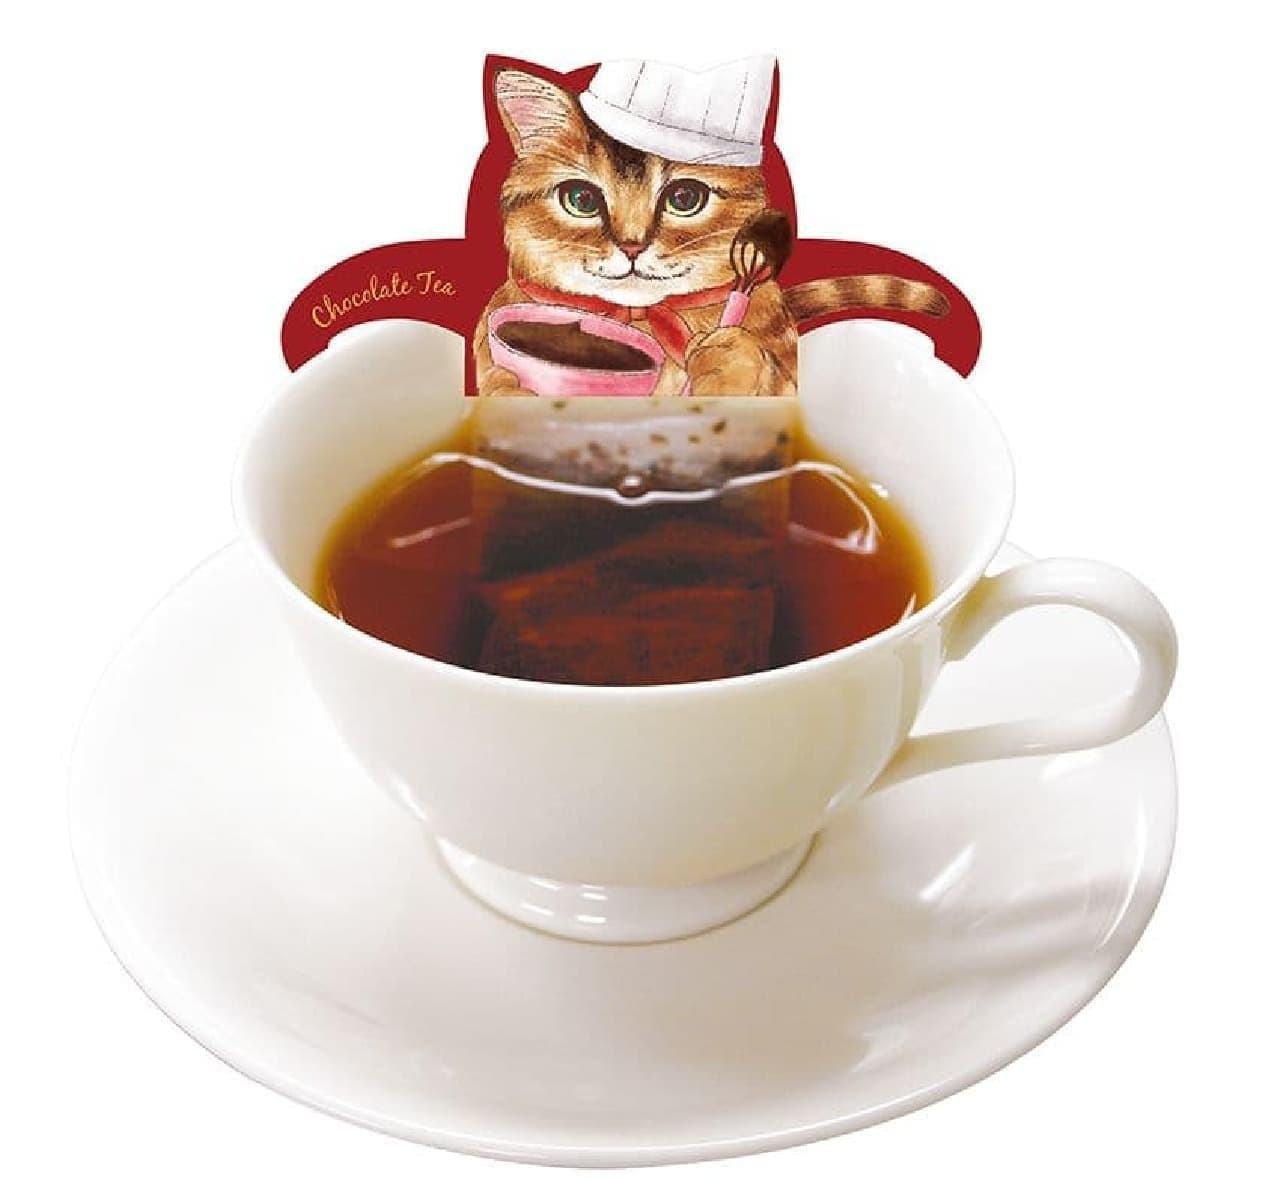 Sweet cat cafe (chocolate tea)